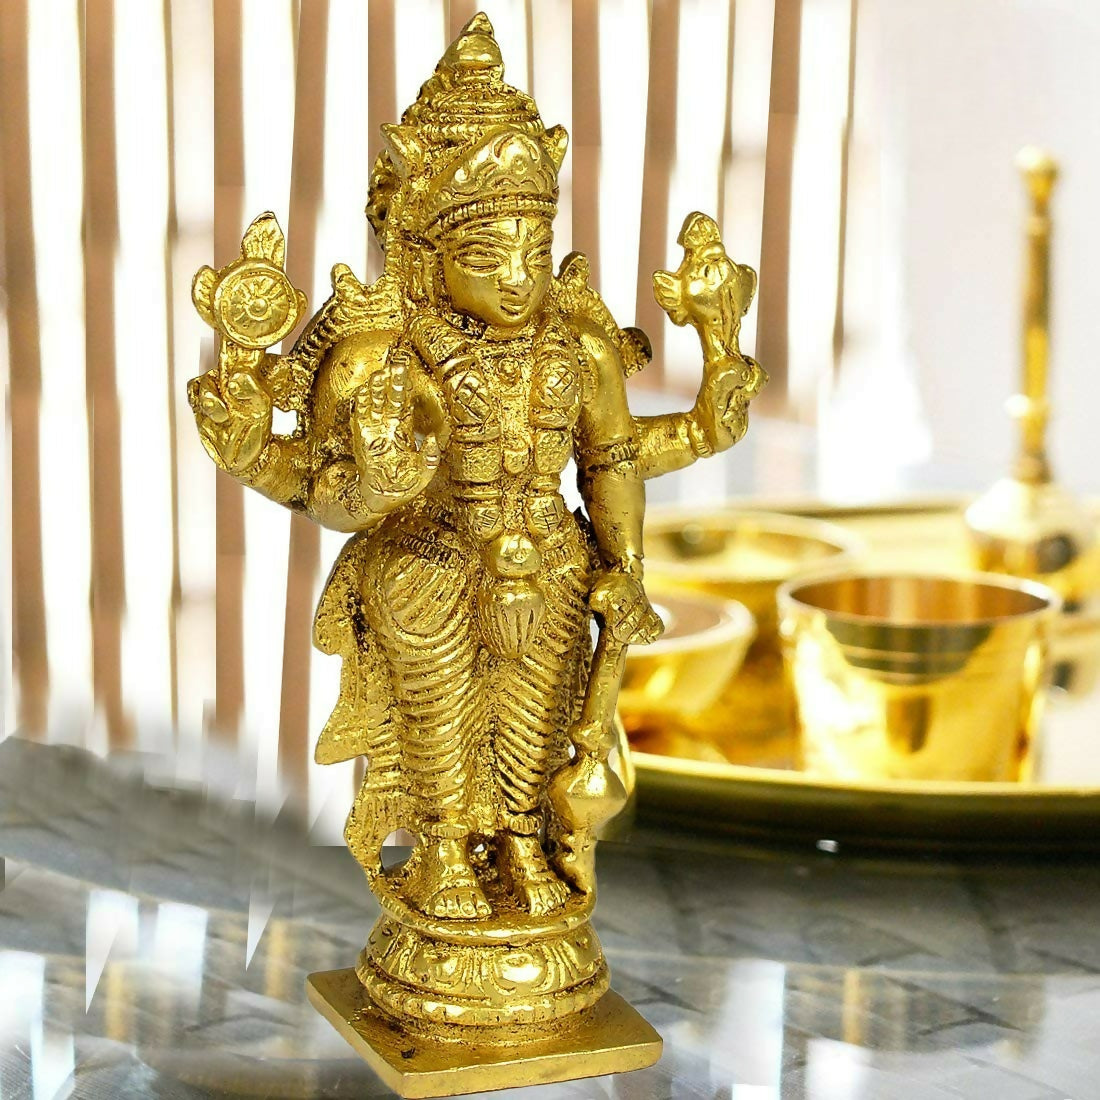 Reiki Crystal Products Pure Brass Vishnu Idol - Distacart